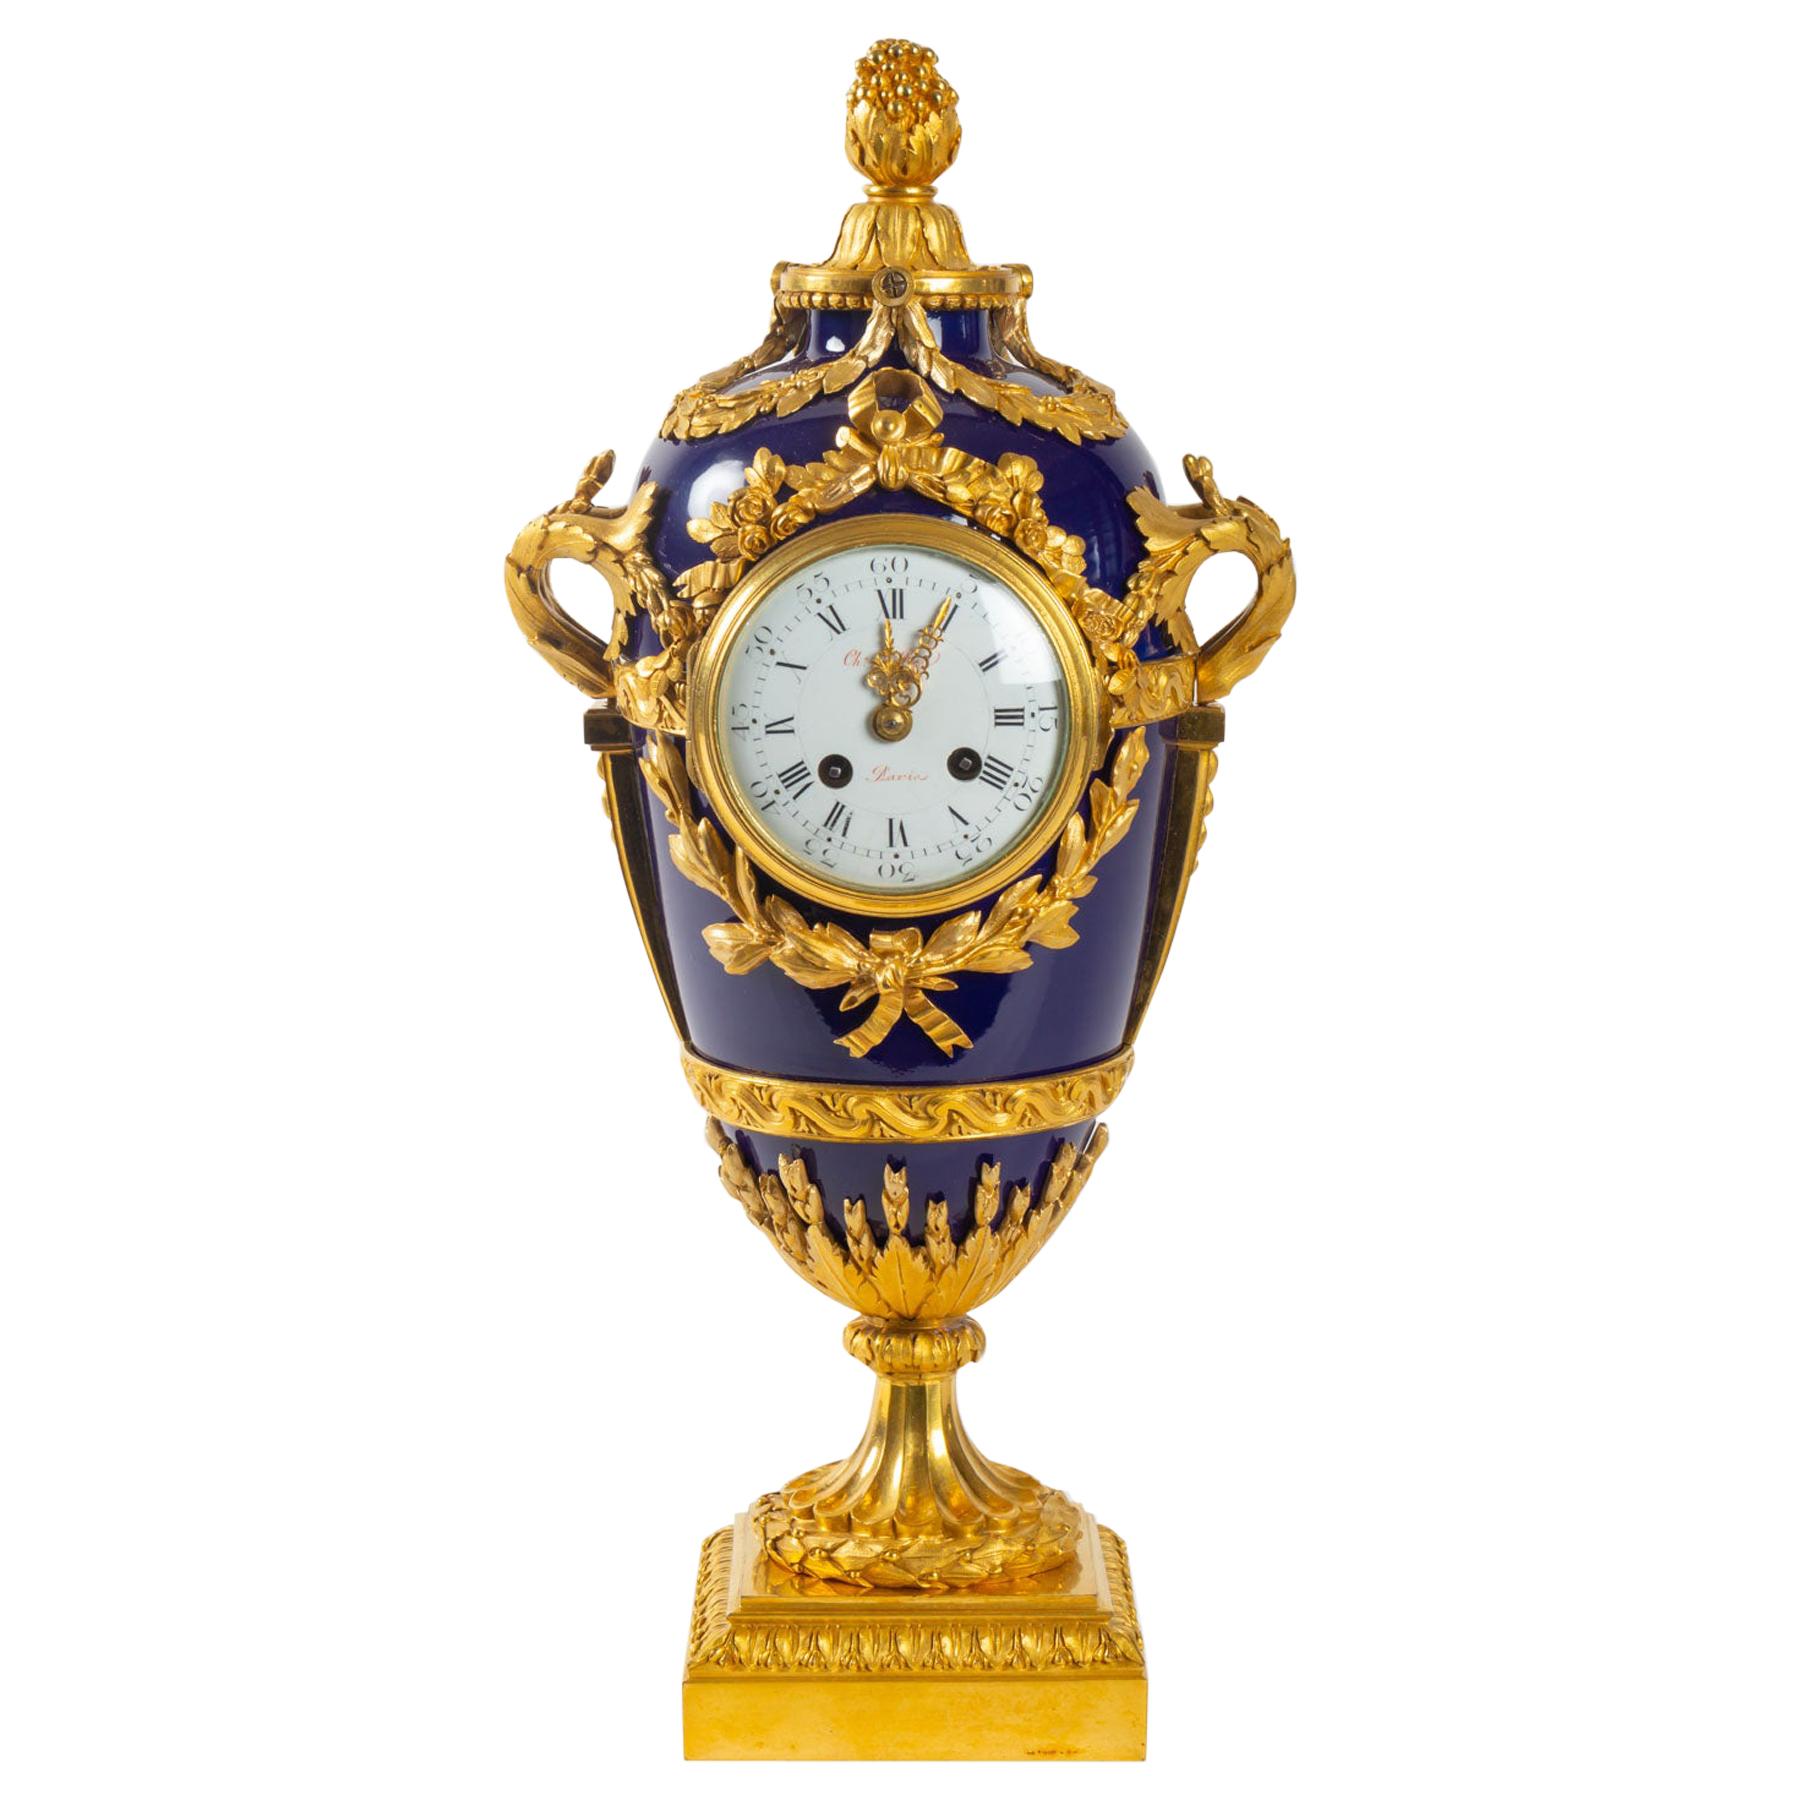 Superb Clock, Giltbronze and Blue Enamel by Beurdeley, Paris, France, circa 1850 For Sale